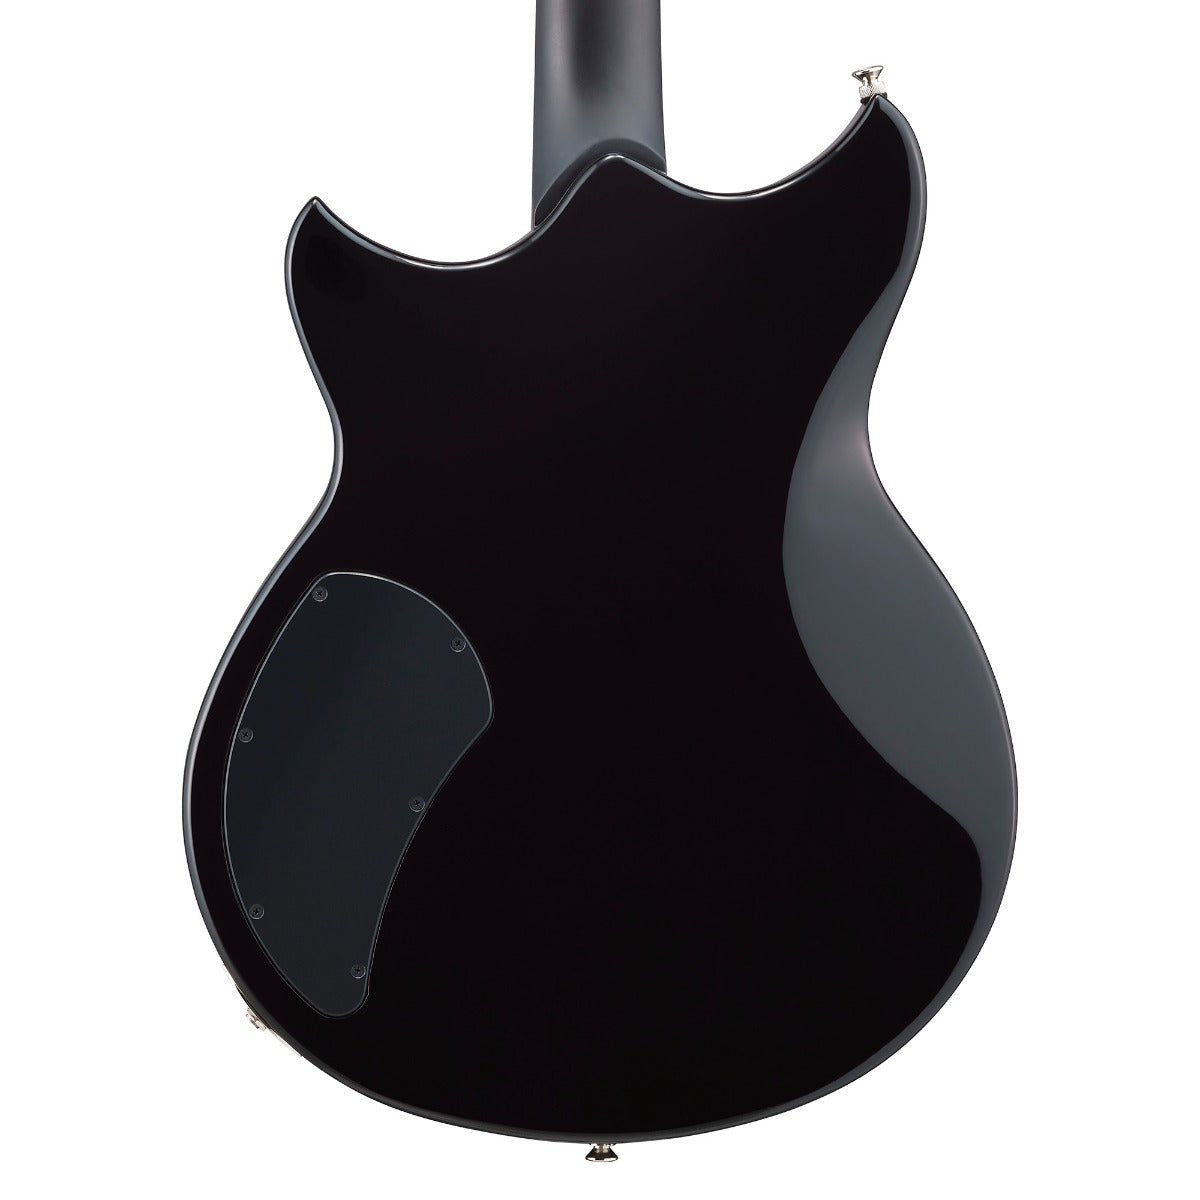 Yamaha RSE20 Revstar Element Electric Guitar - Black, View 2